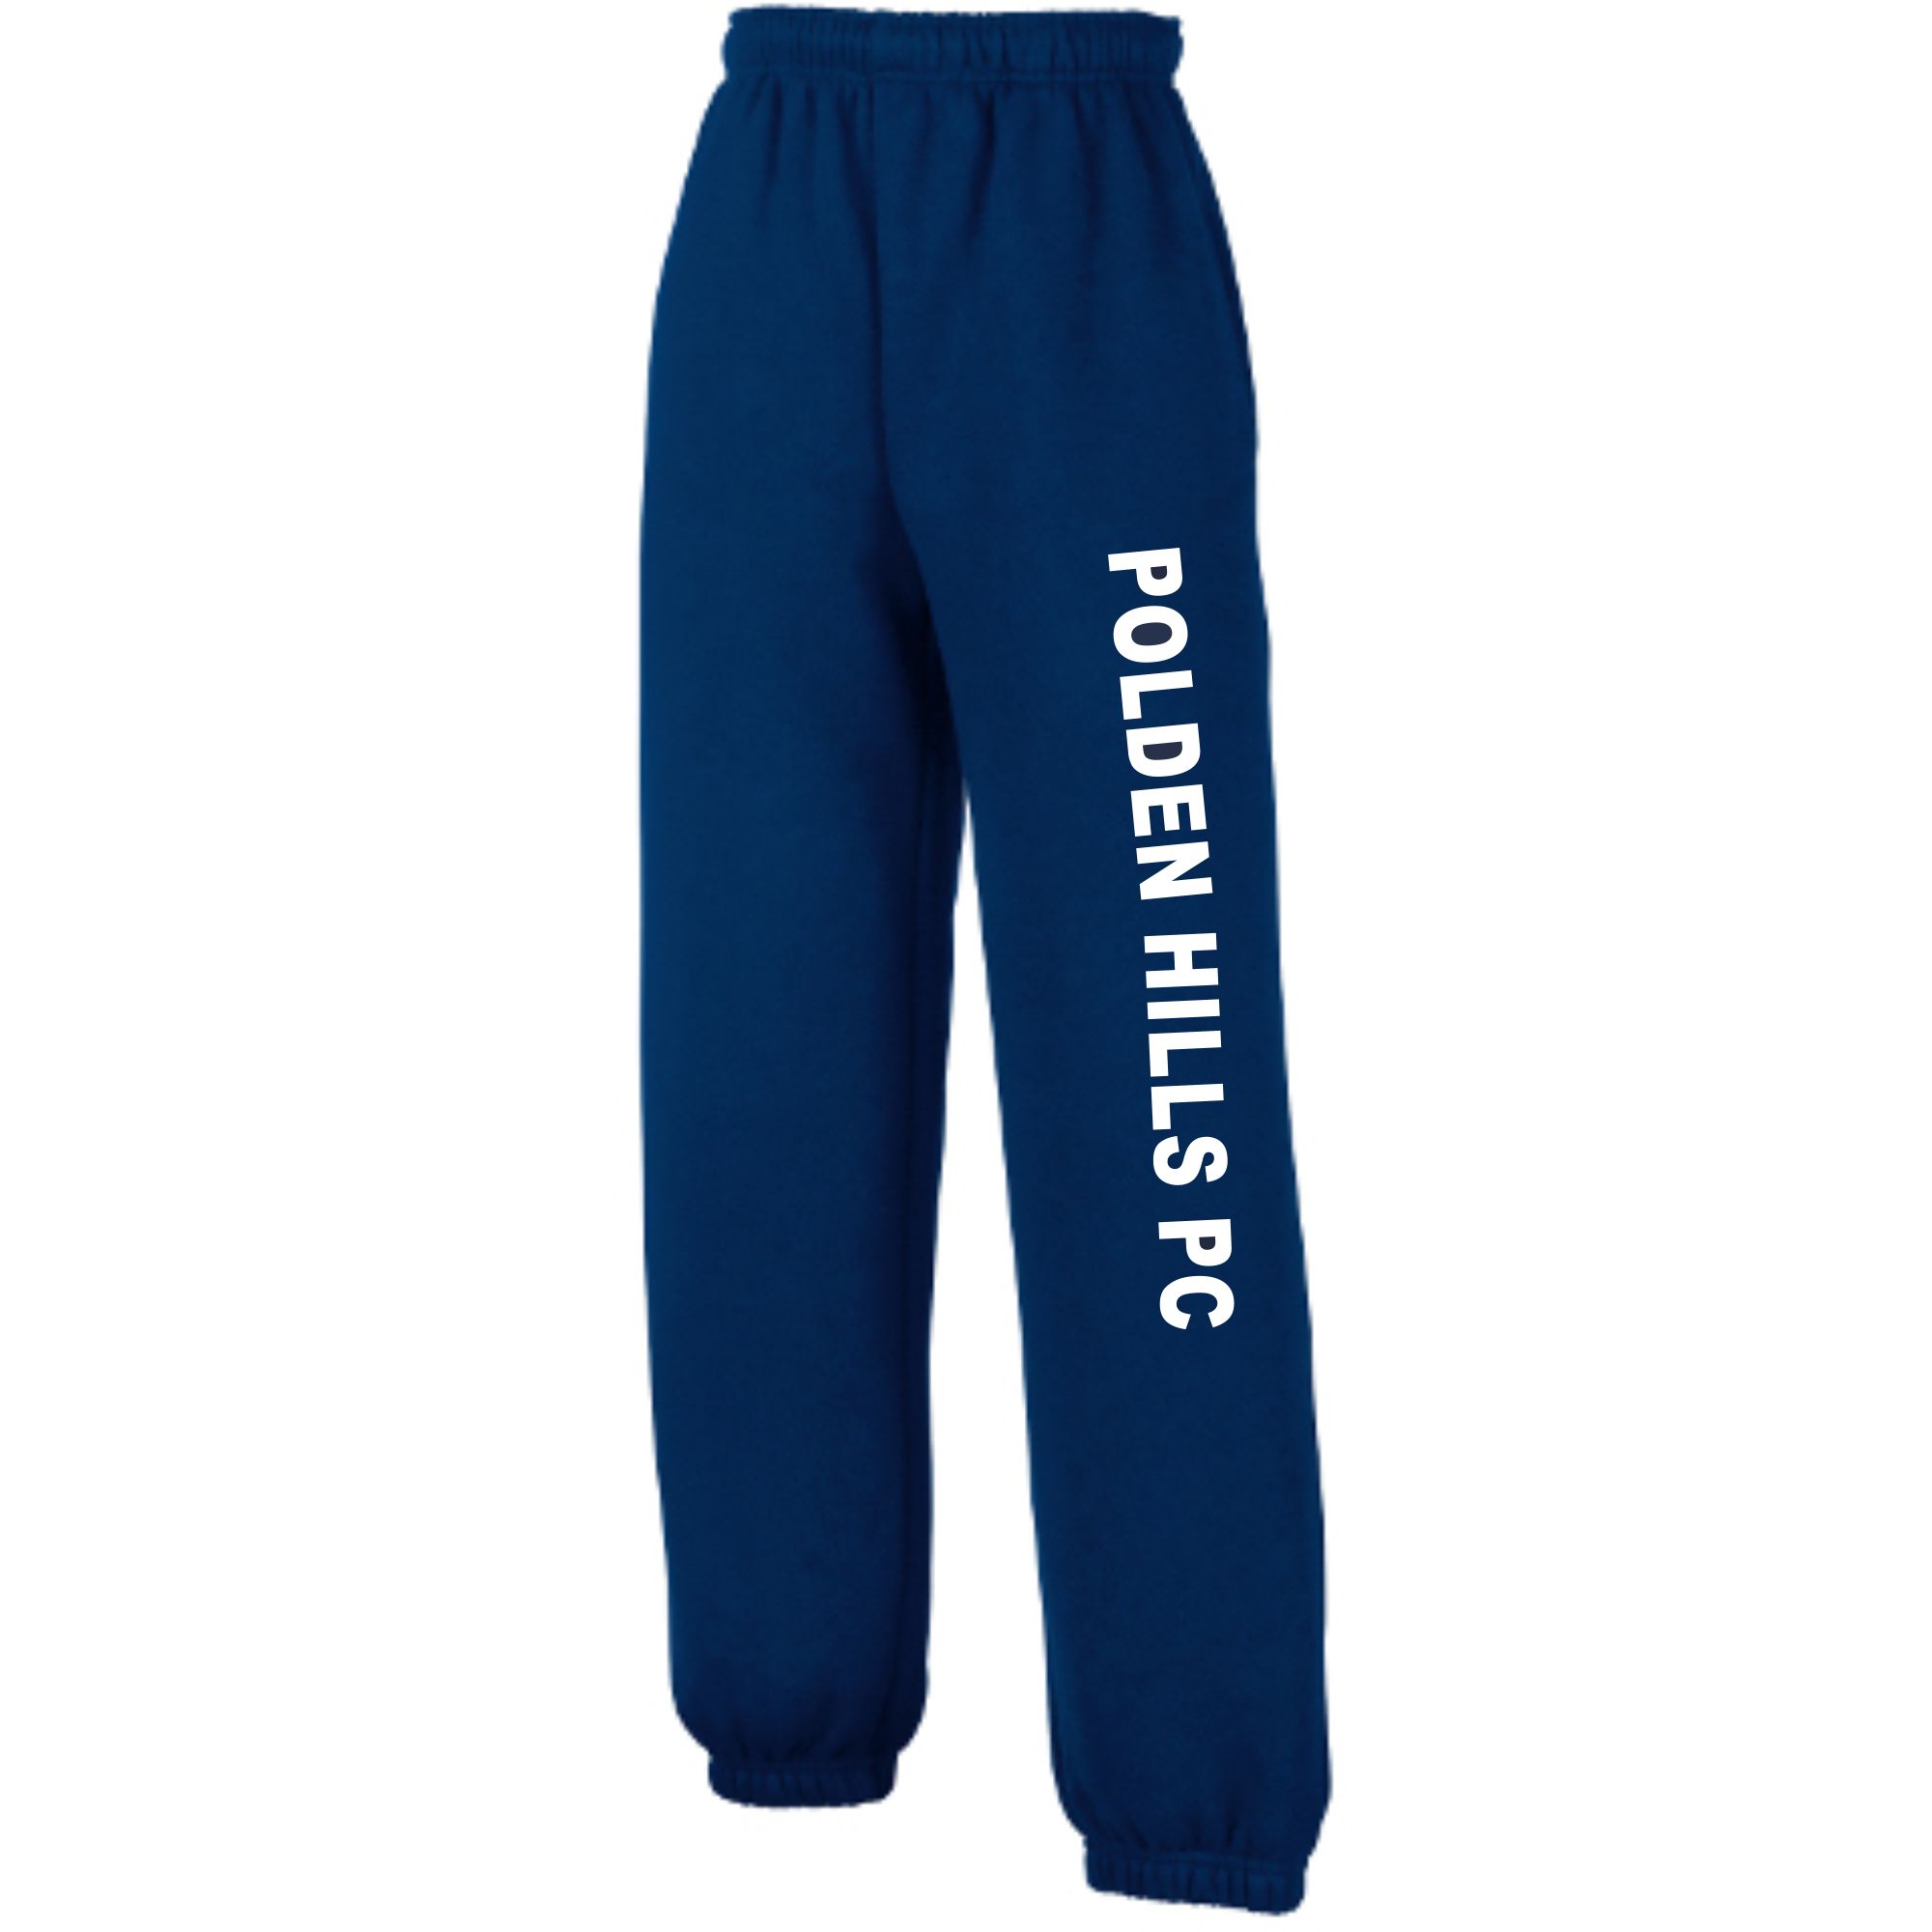 Polden Hills PC Jogging Bottoms - SS31B | Jual Branded Clothing ...